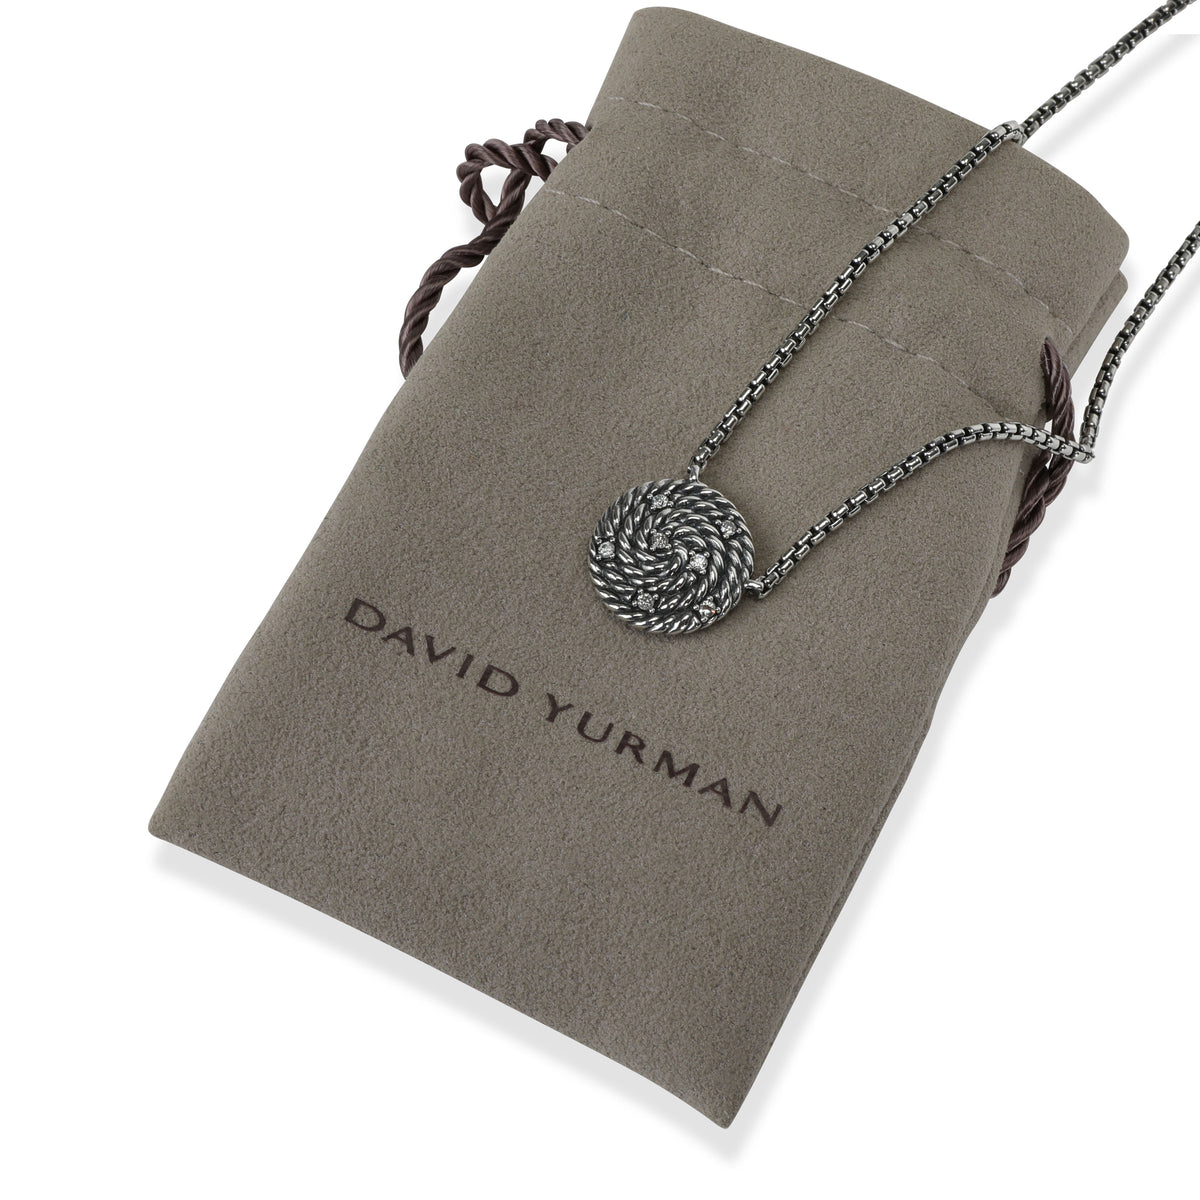 David Yurman Diamond Coil Necklace in  Sterling Silver 0.07 CTW